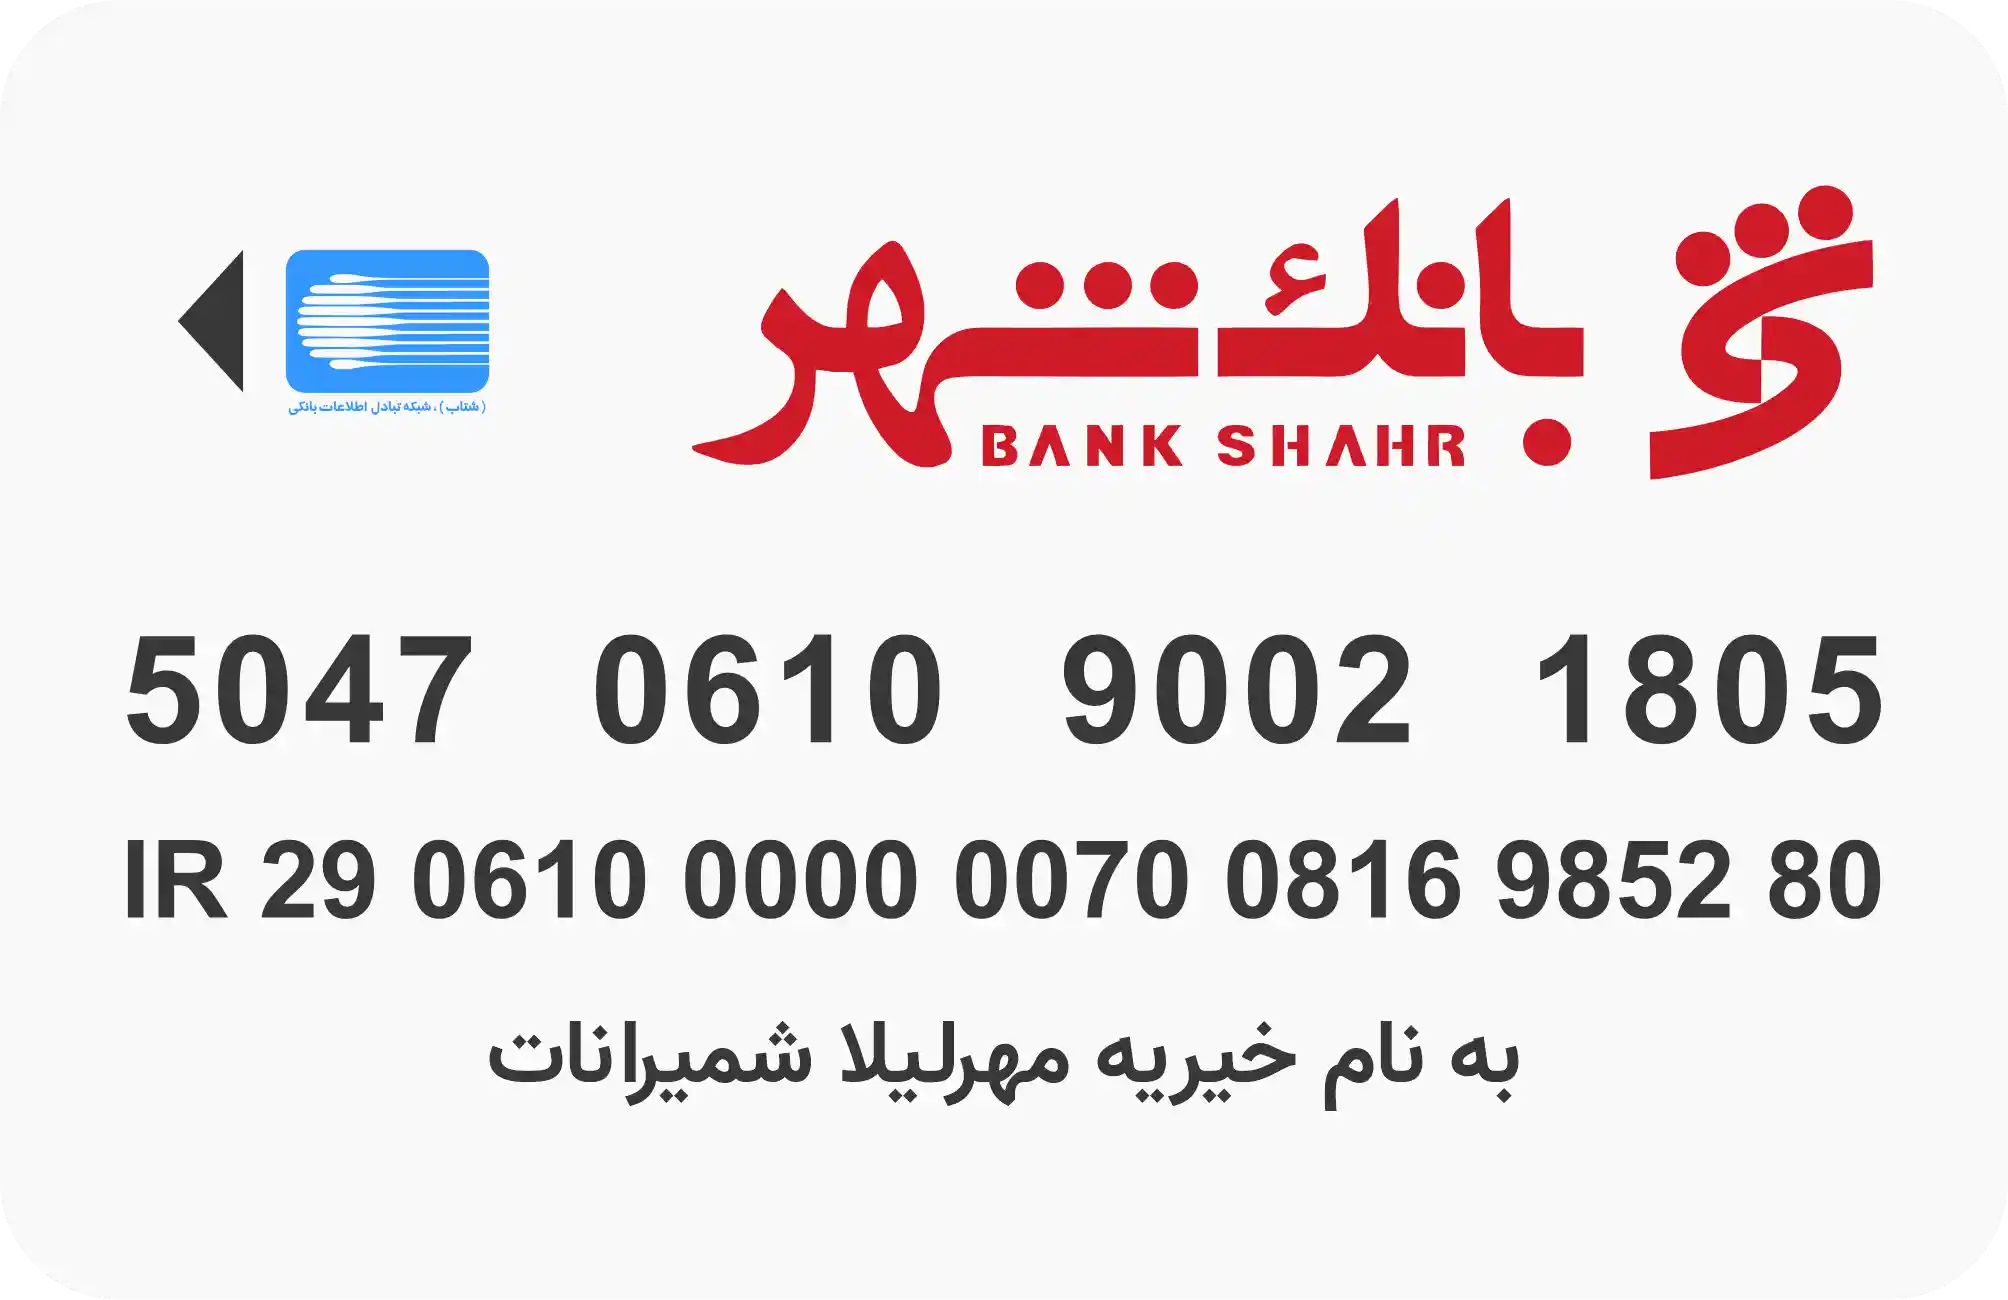 Bank Shahr 2